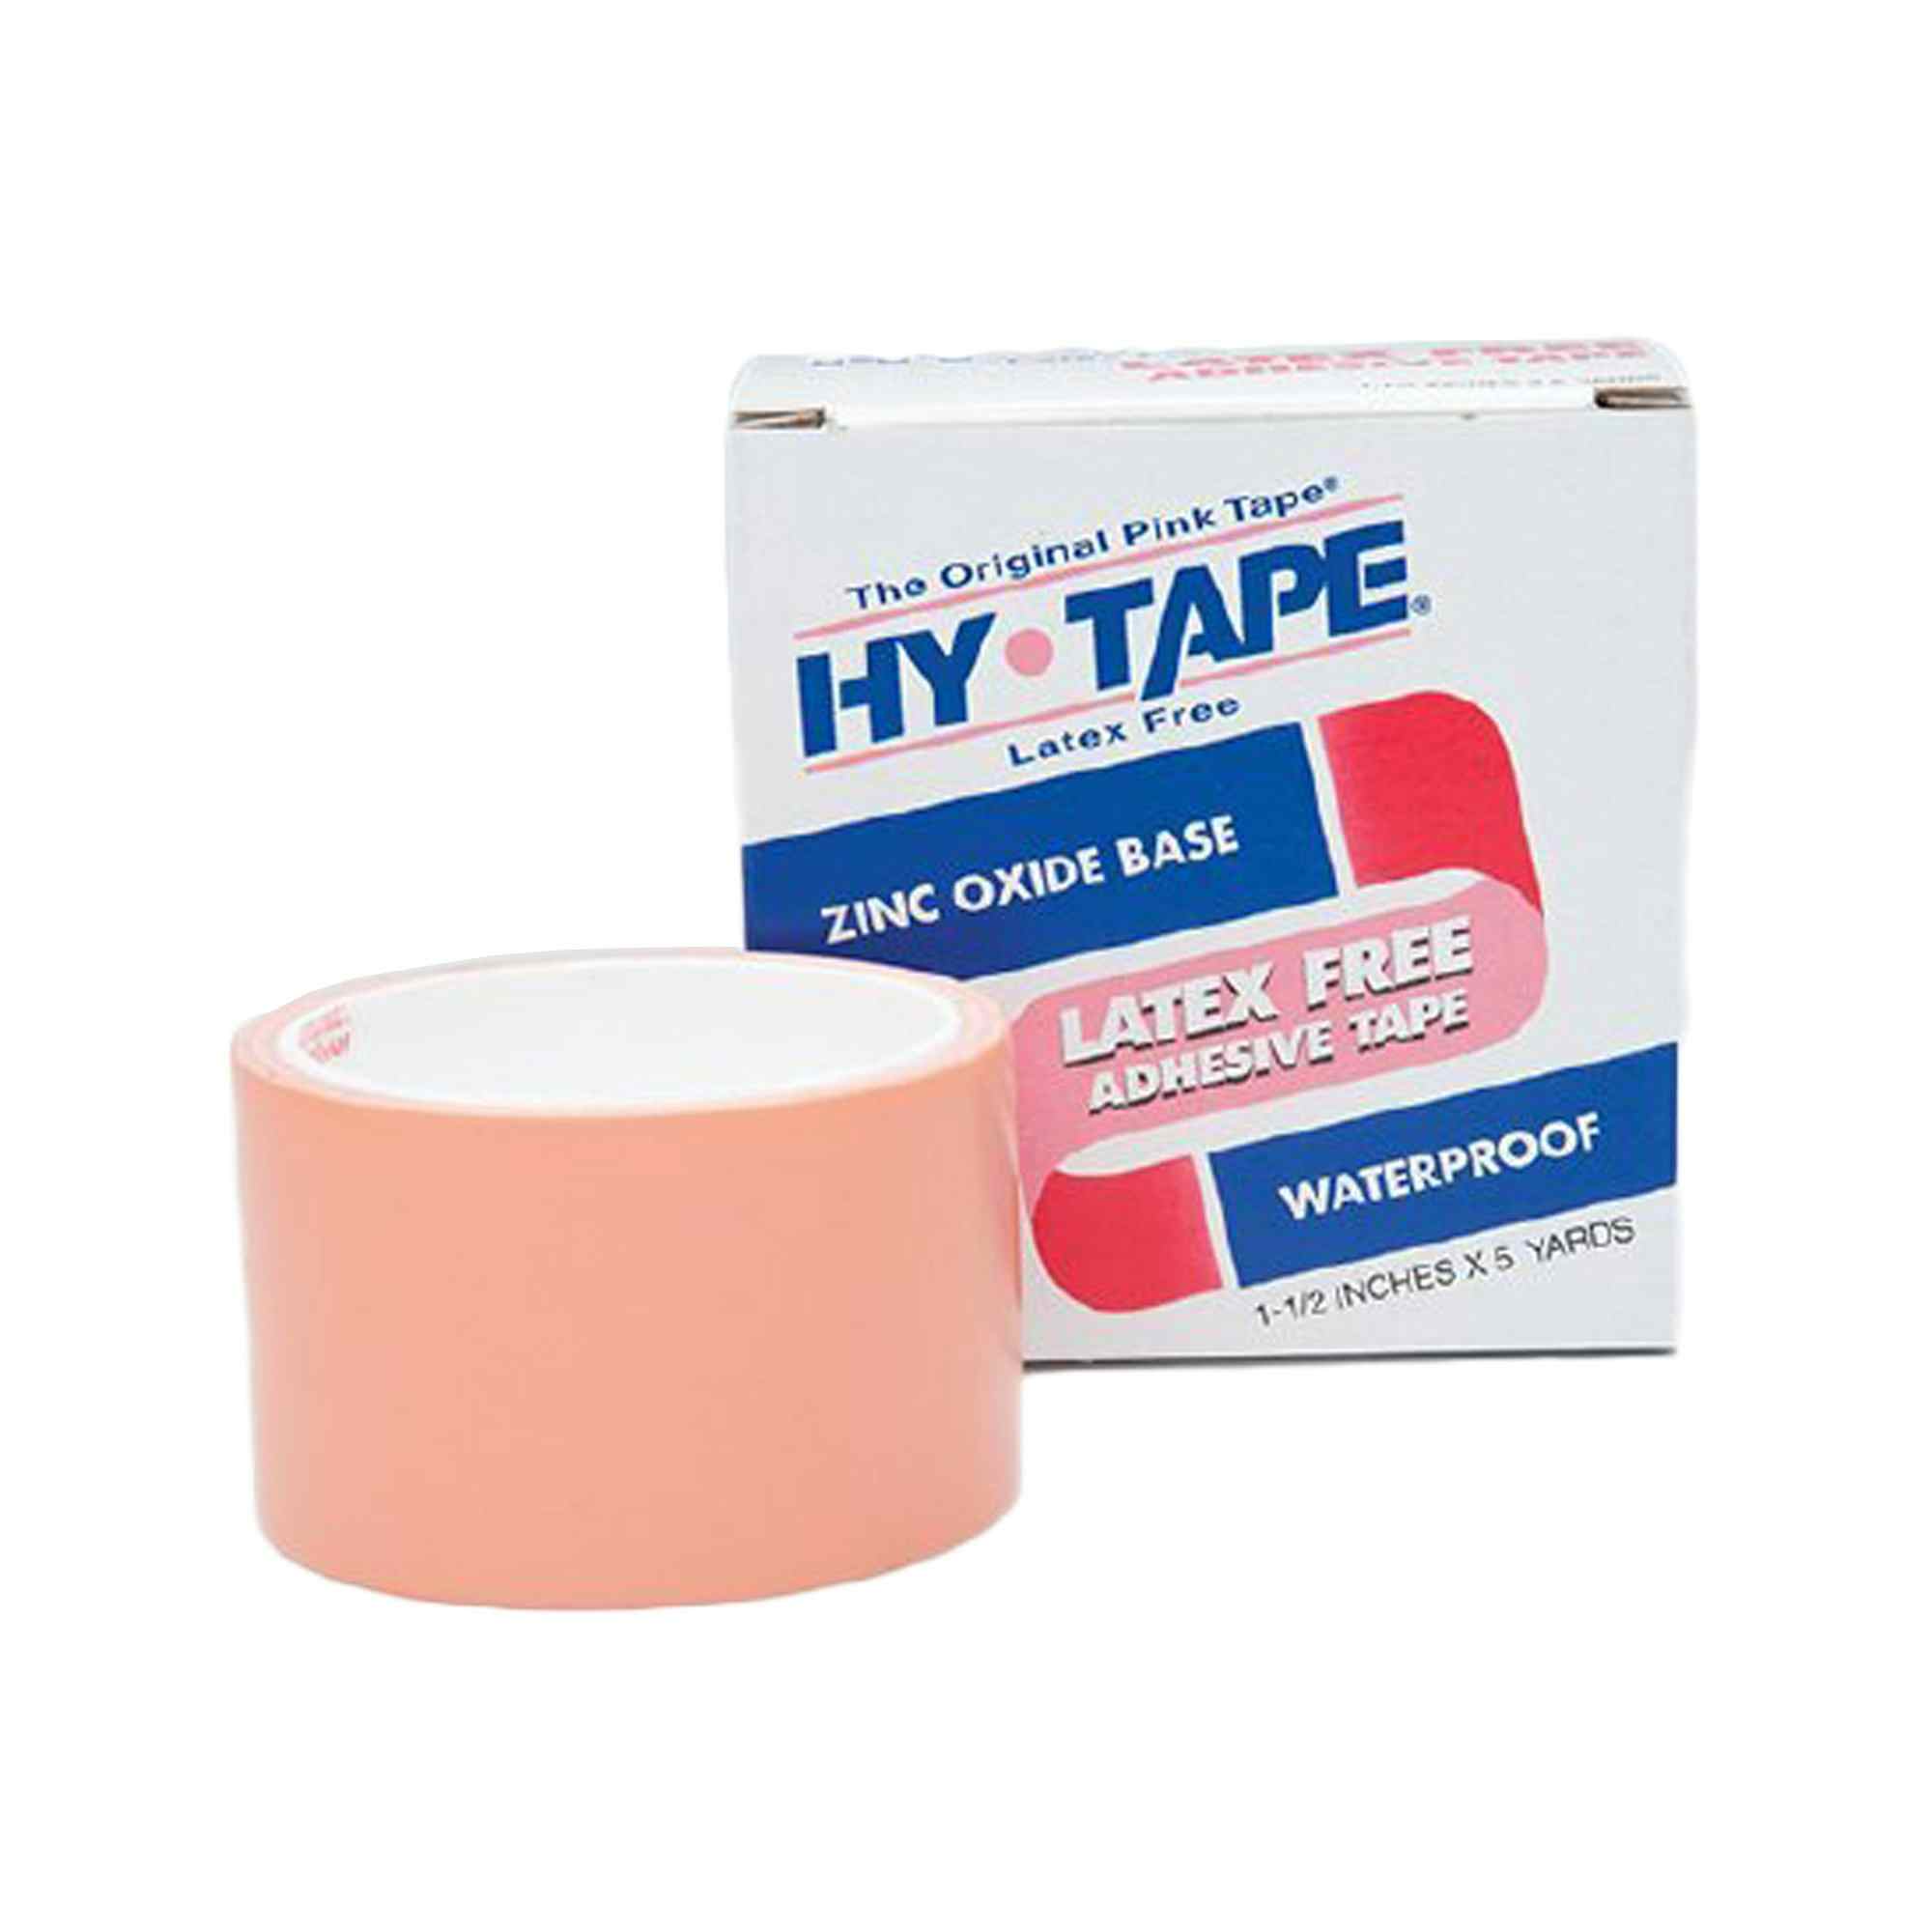 Hy-Tape Latex Free Zinc Oxide-Base Adhesive Tape, Waterproof, 2" X 5 yds